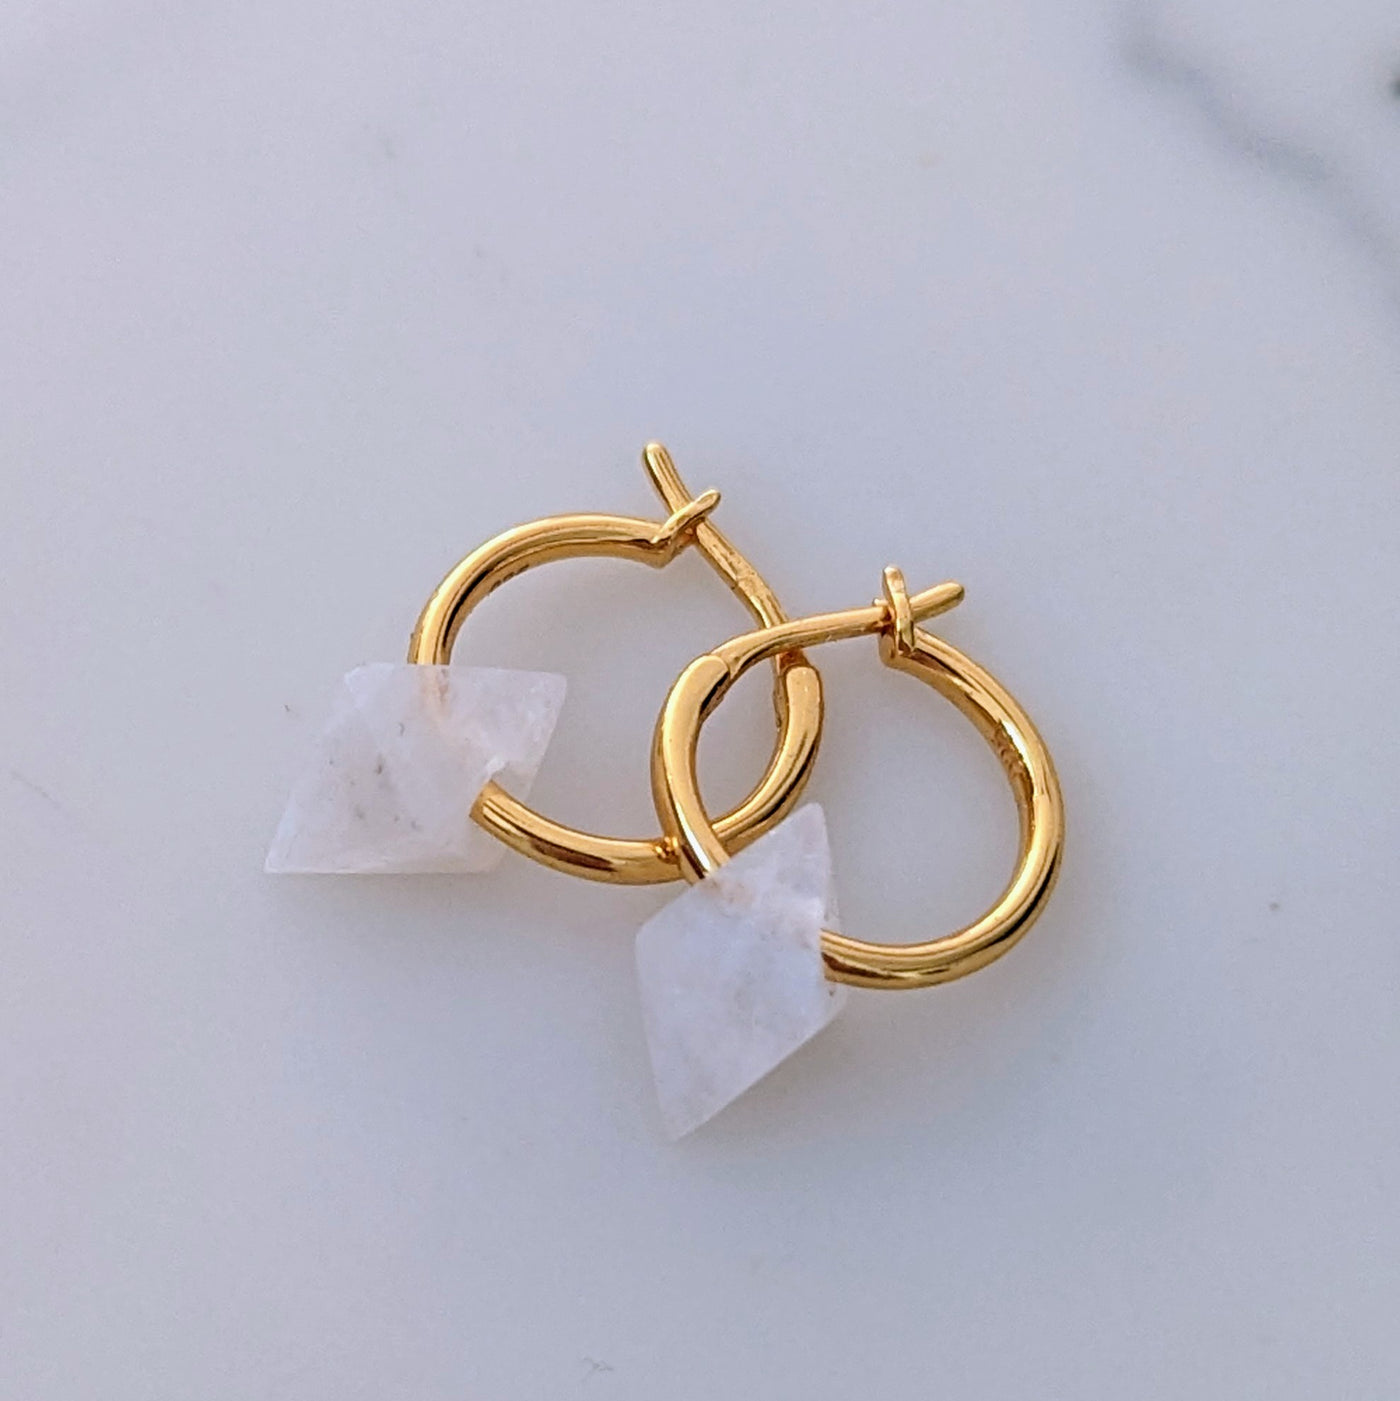 Moonstone gold plated octahedron charm hoop earrings